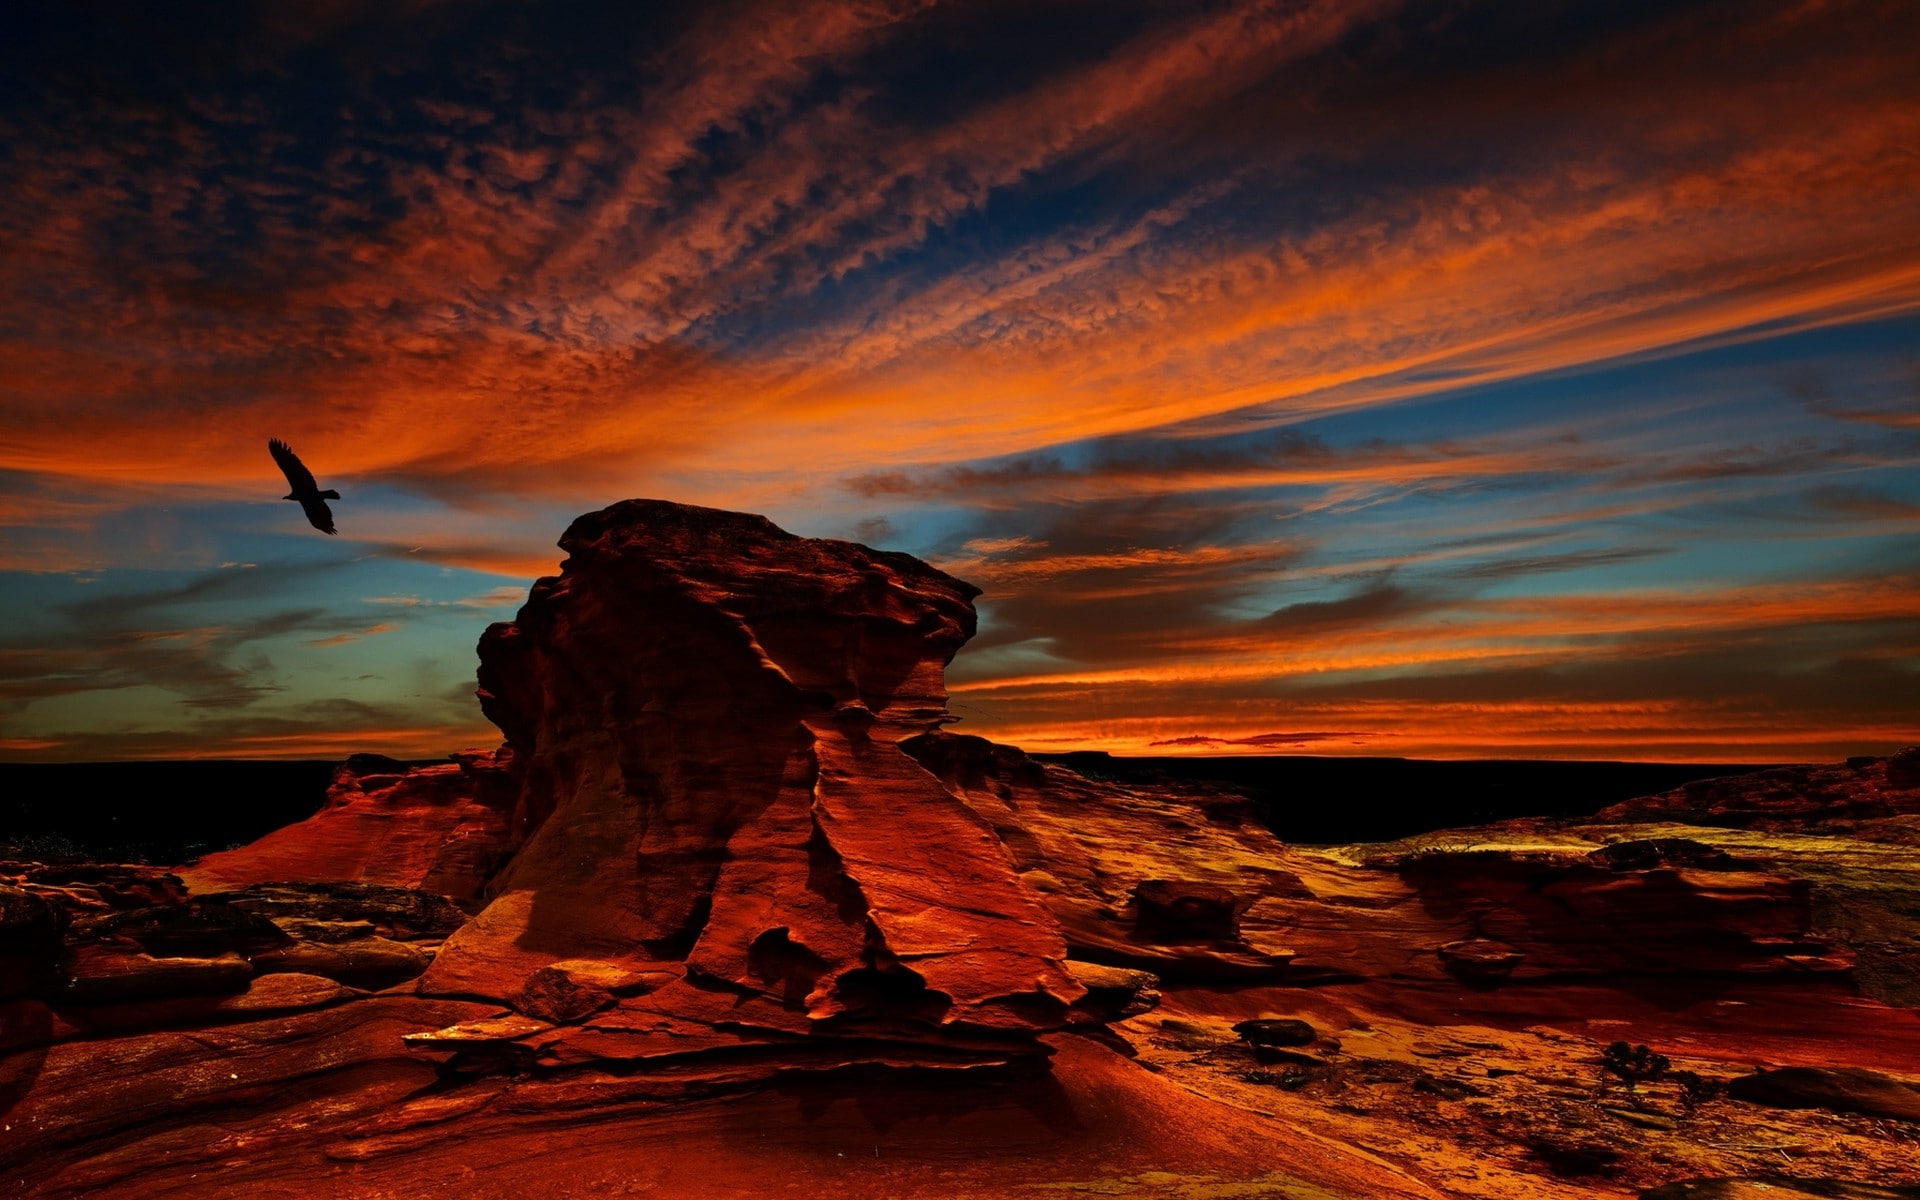 desert atacama desert sunset rock erosion birds condors flying clouds chile nature colorful landscape